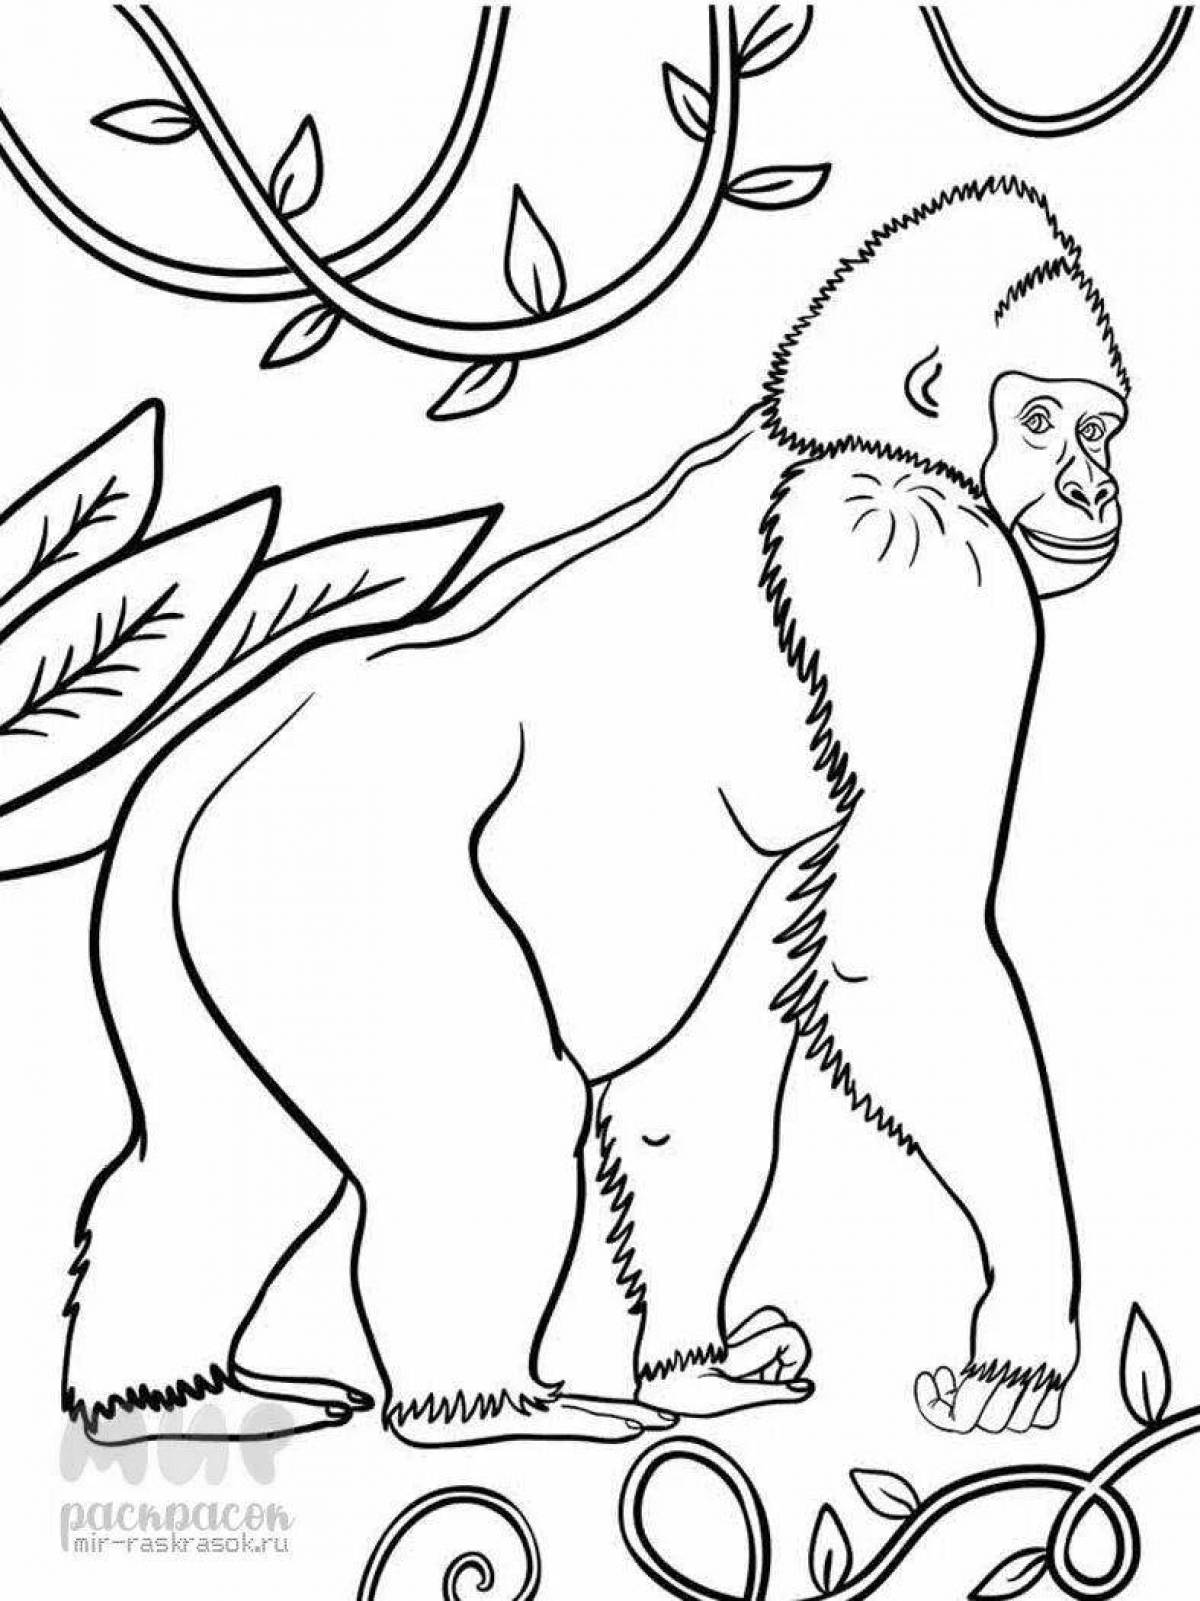 Adorable gorilla coloring book for kids